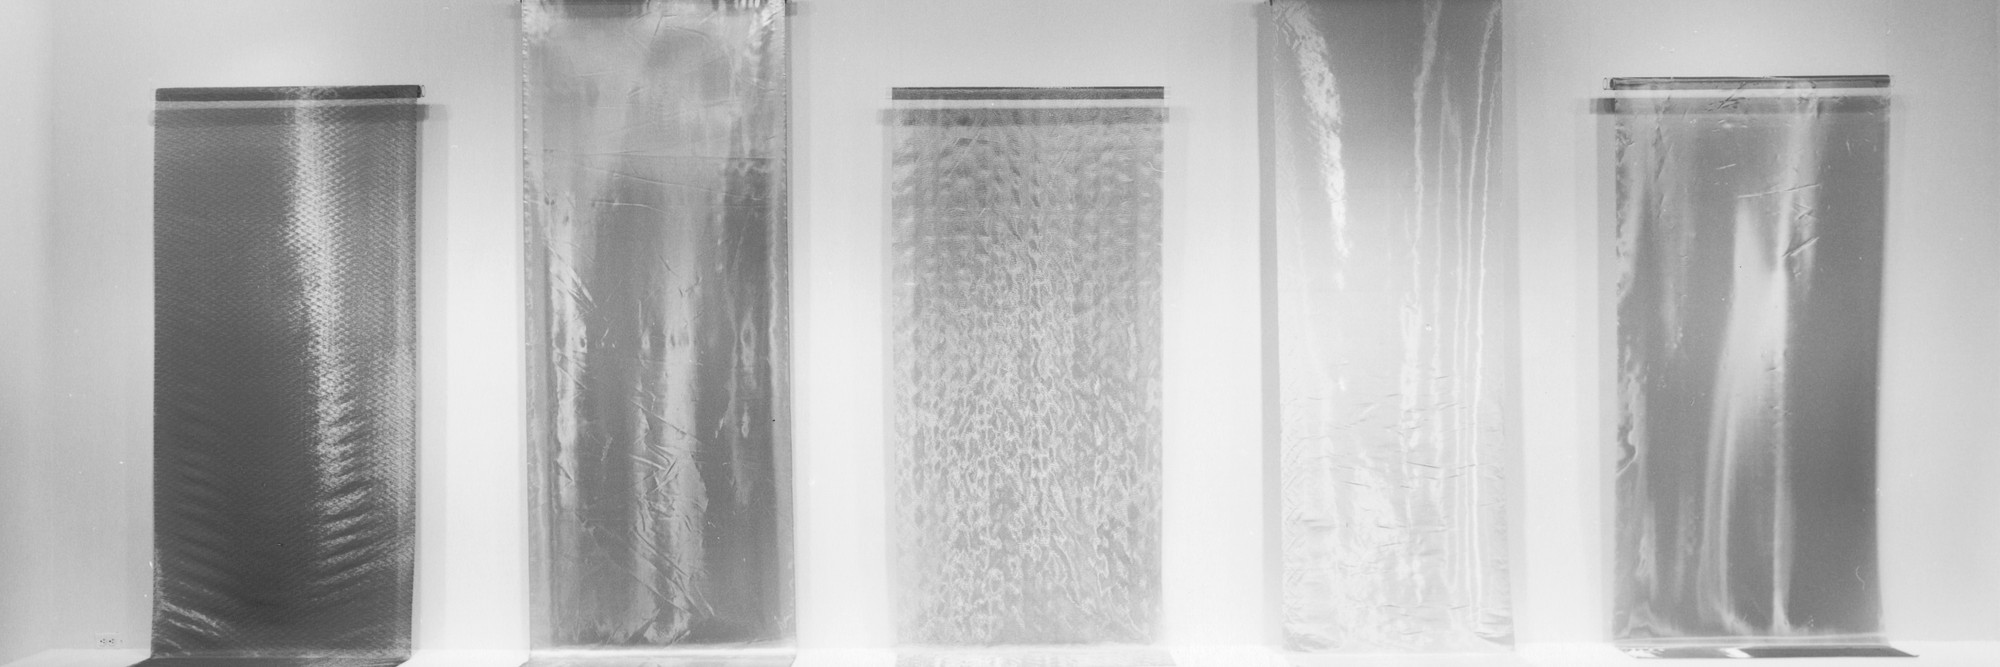 Installation view of Metallic Fabrics from the Collection at The Museum of Modern Art, New York. Photo: Mali Olatunji